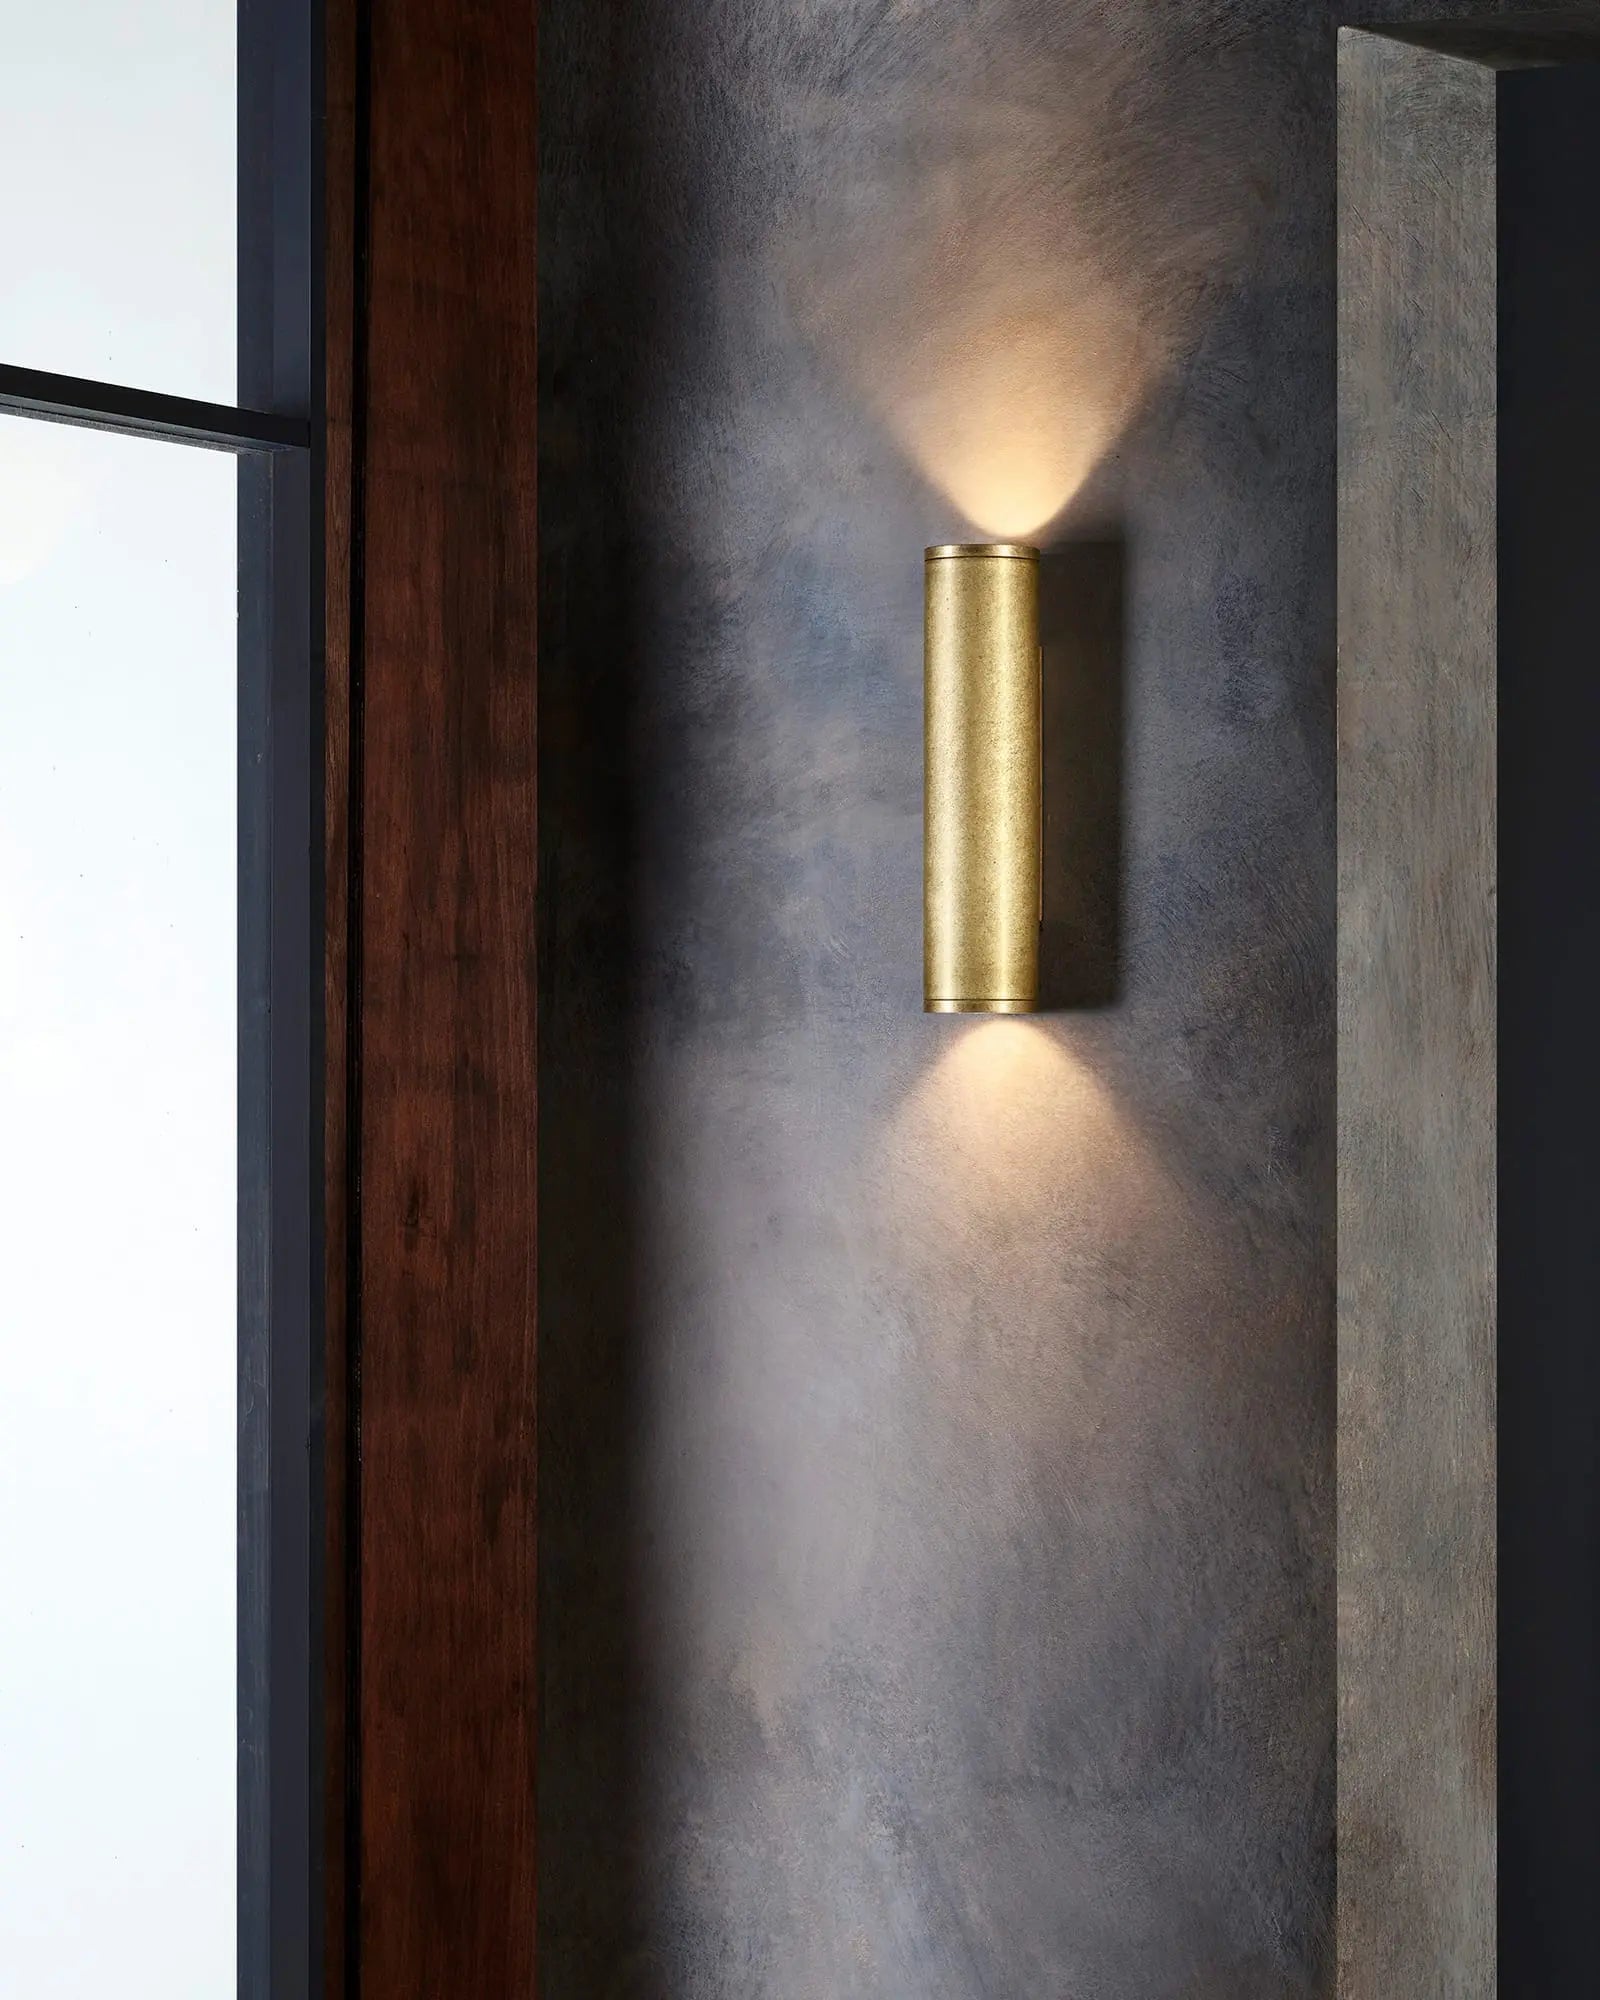 Aba minimalistic cylinder outdoor wall light near entry door